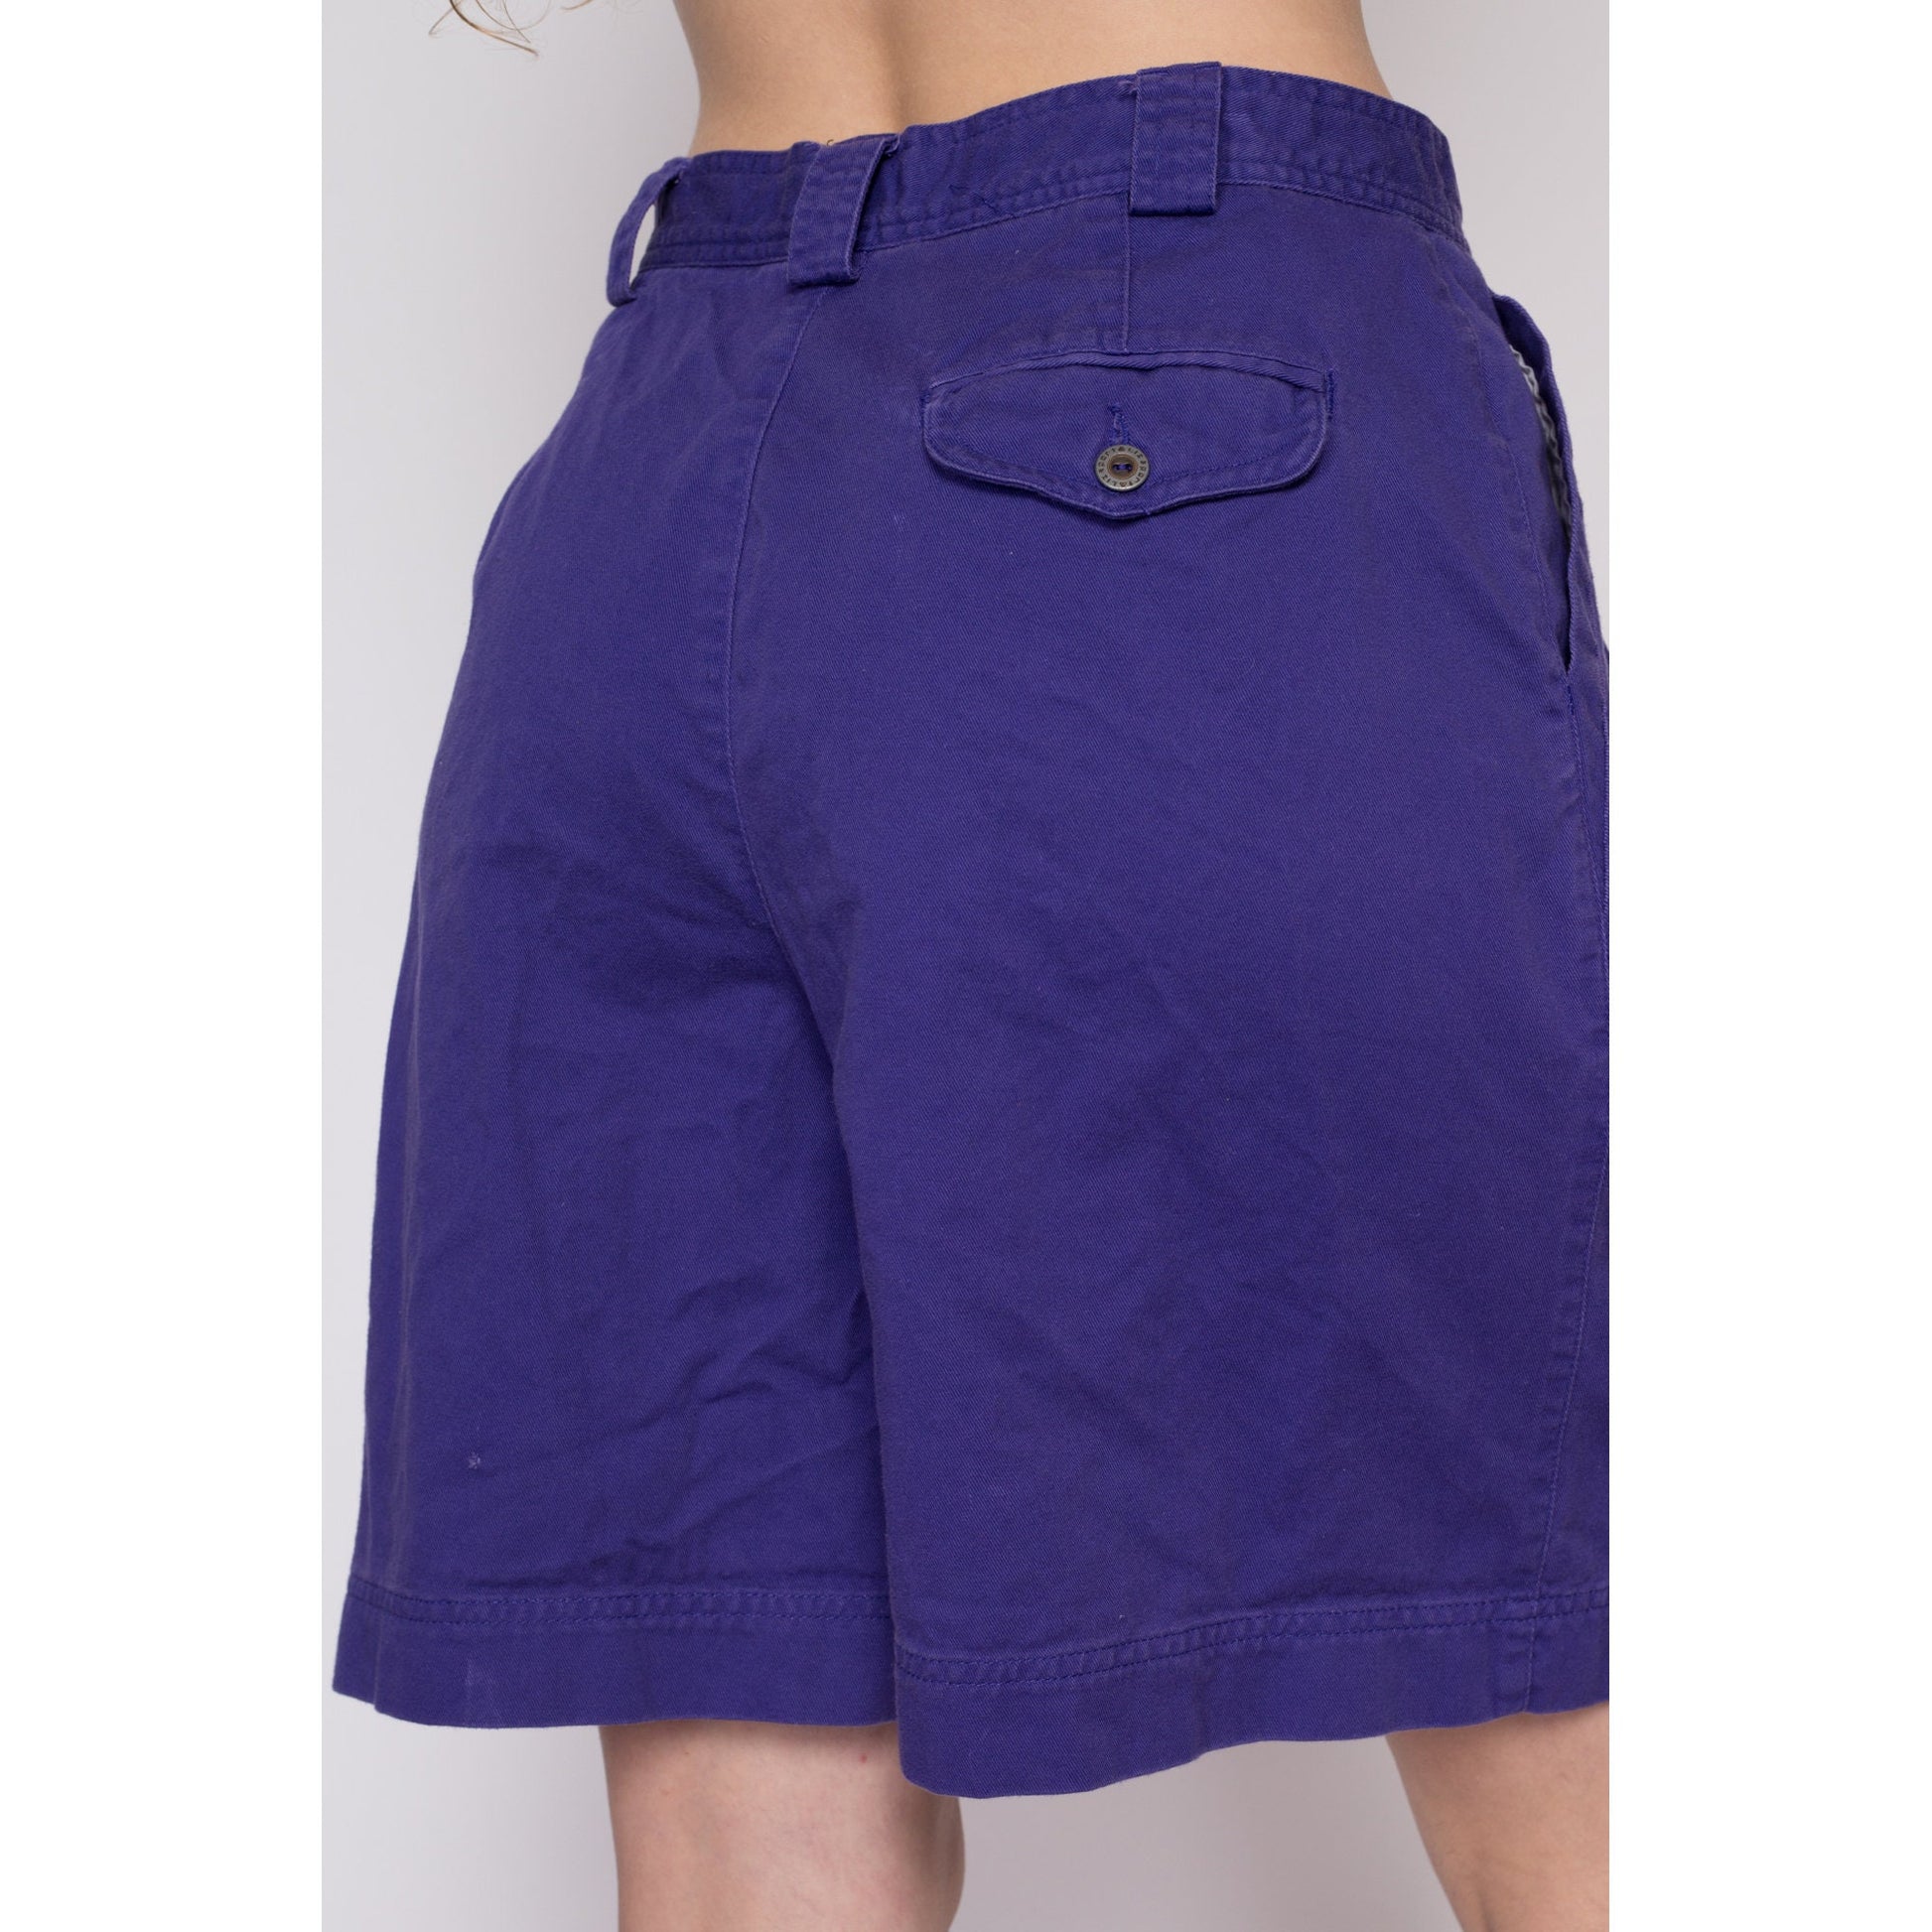 90s Lizwear Purple High Waisted Shorts - Medium to Large, 30" | Vintage Liz Claiborne Soft Cotton Casual Mom Shorts